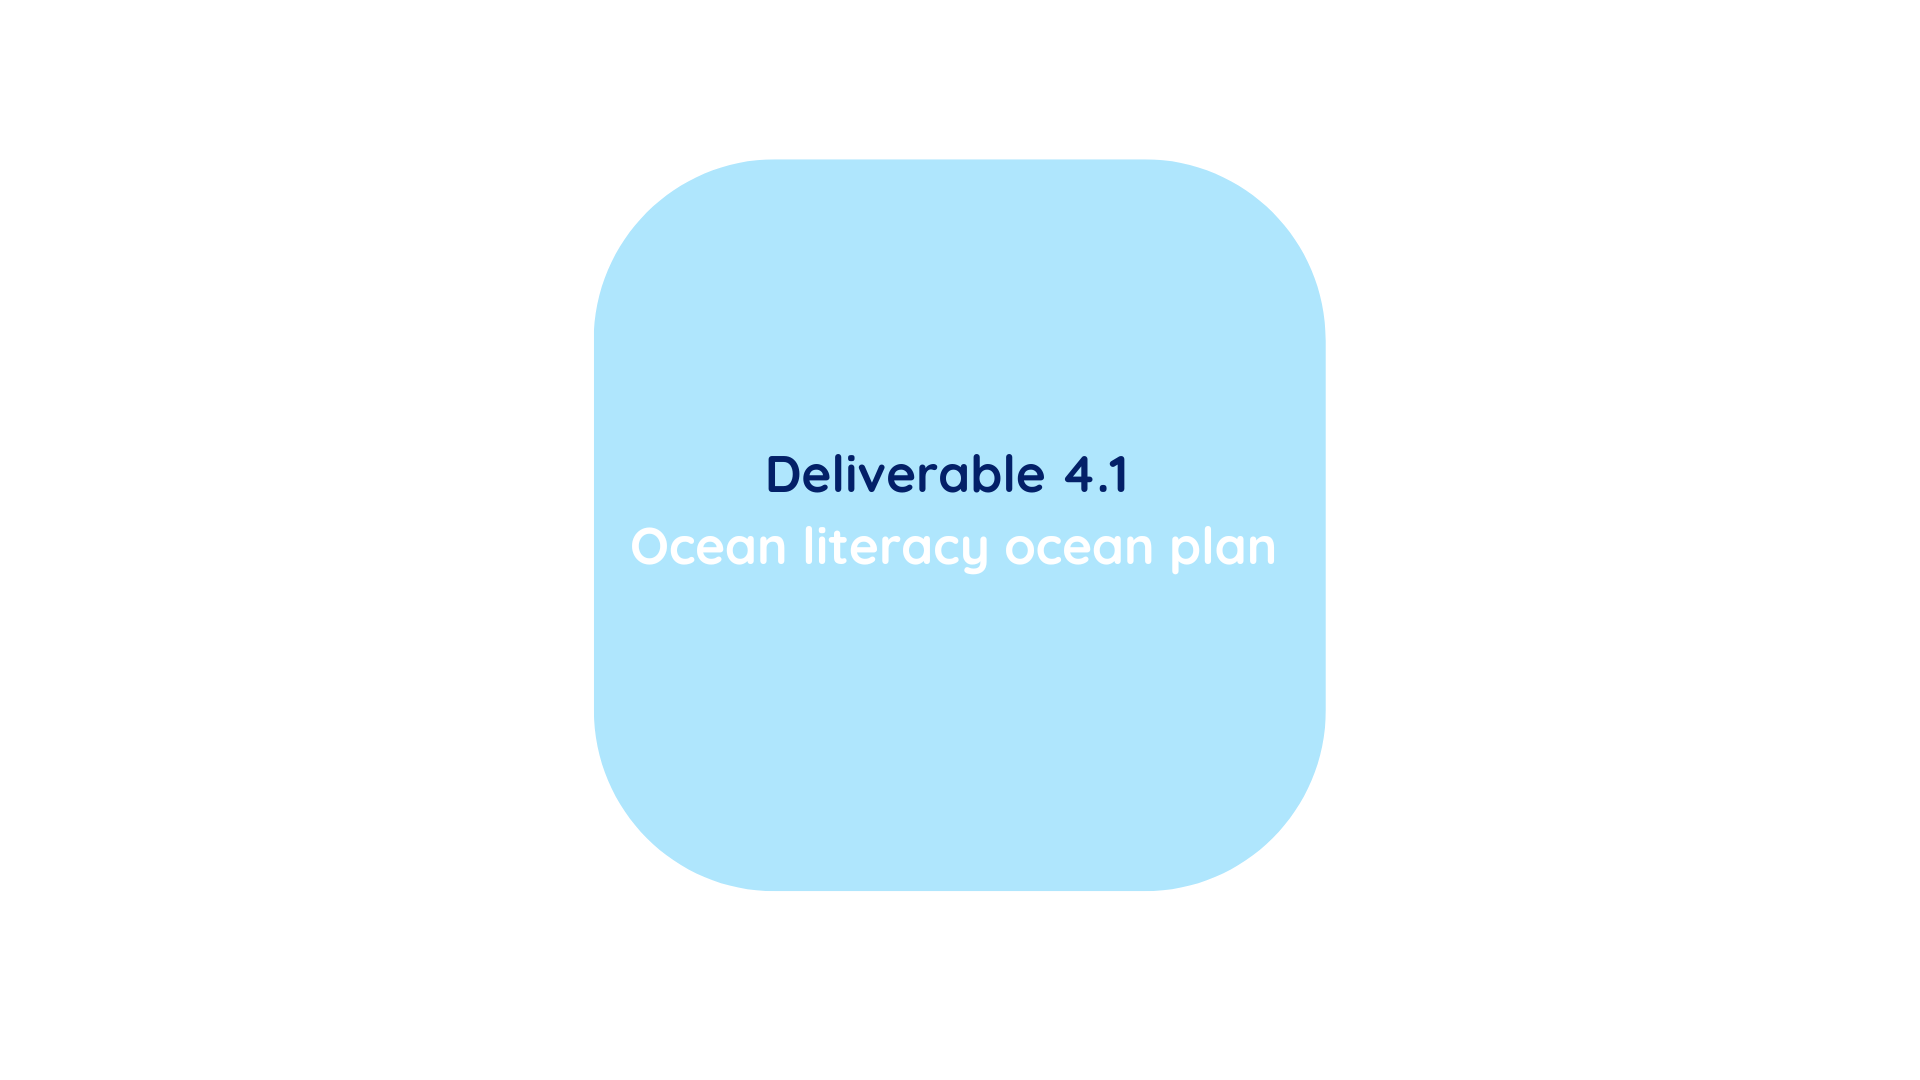 Deliverable 4.1 - Ocean literacy ocean plan